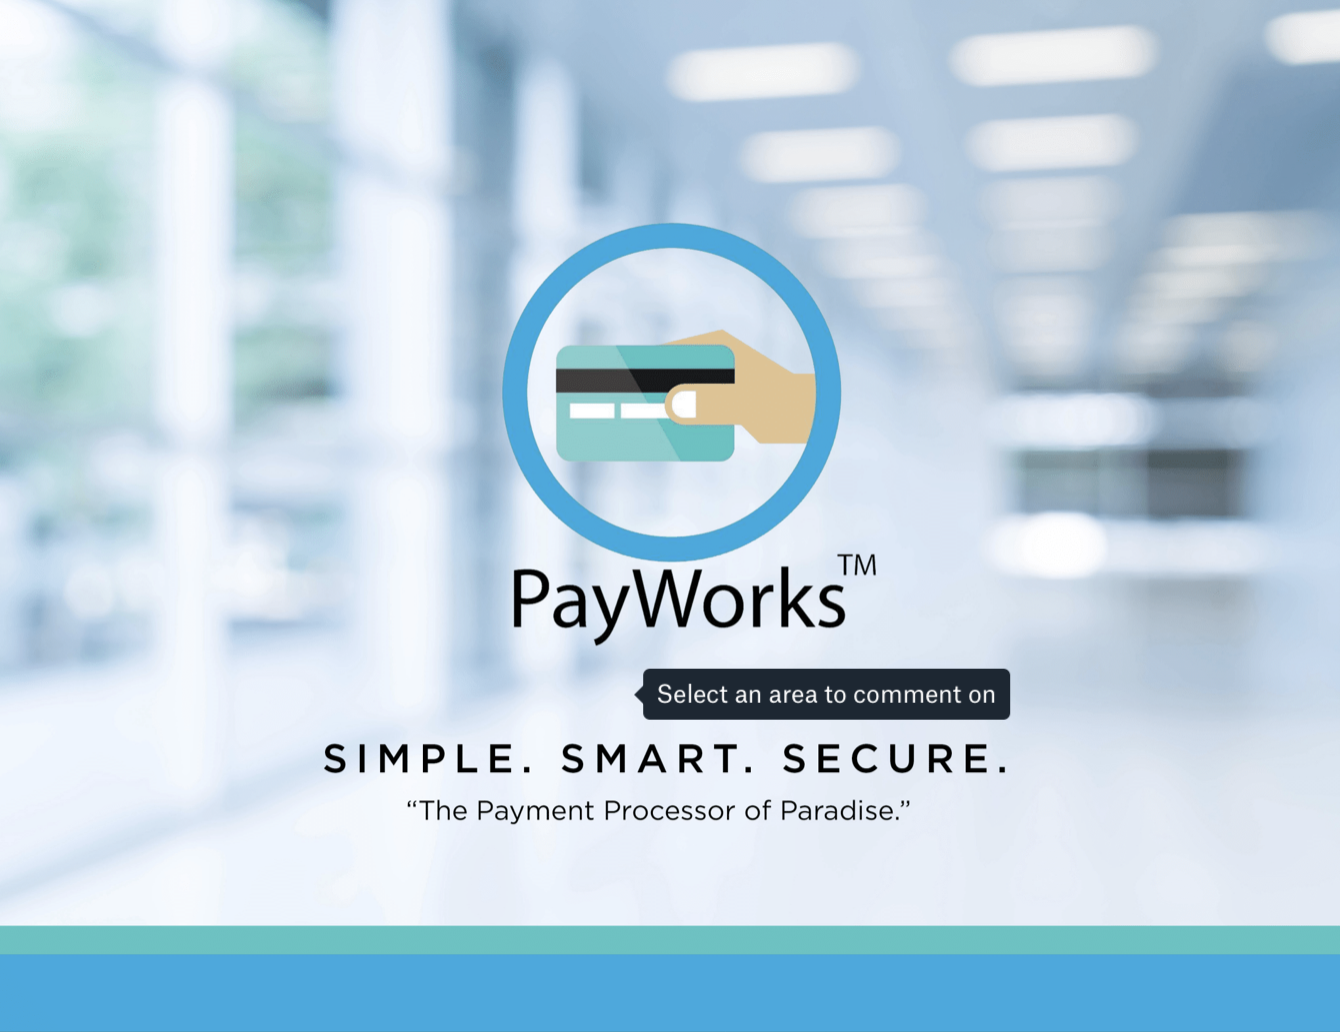 PayWorks